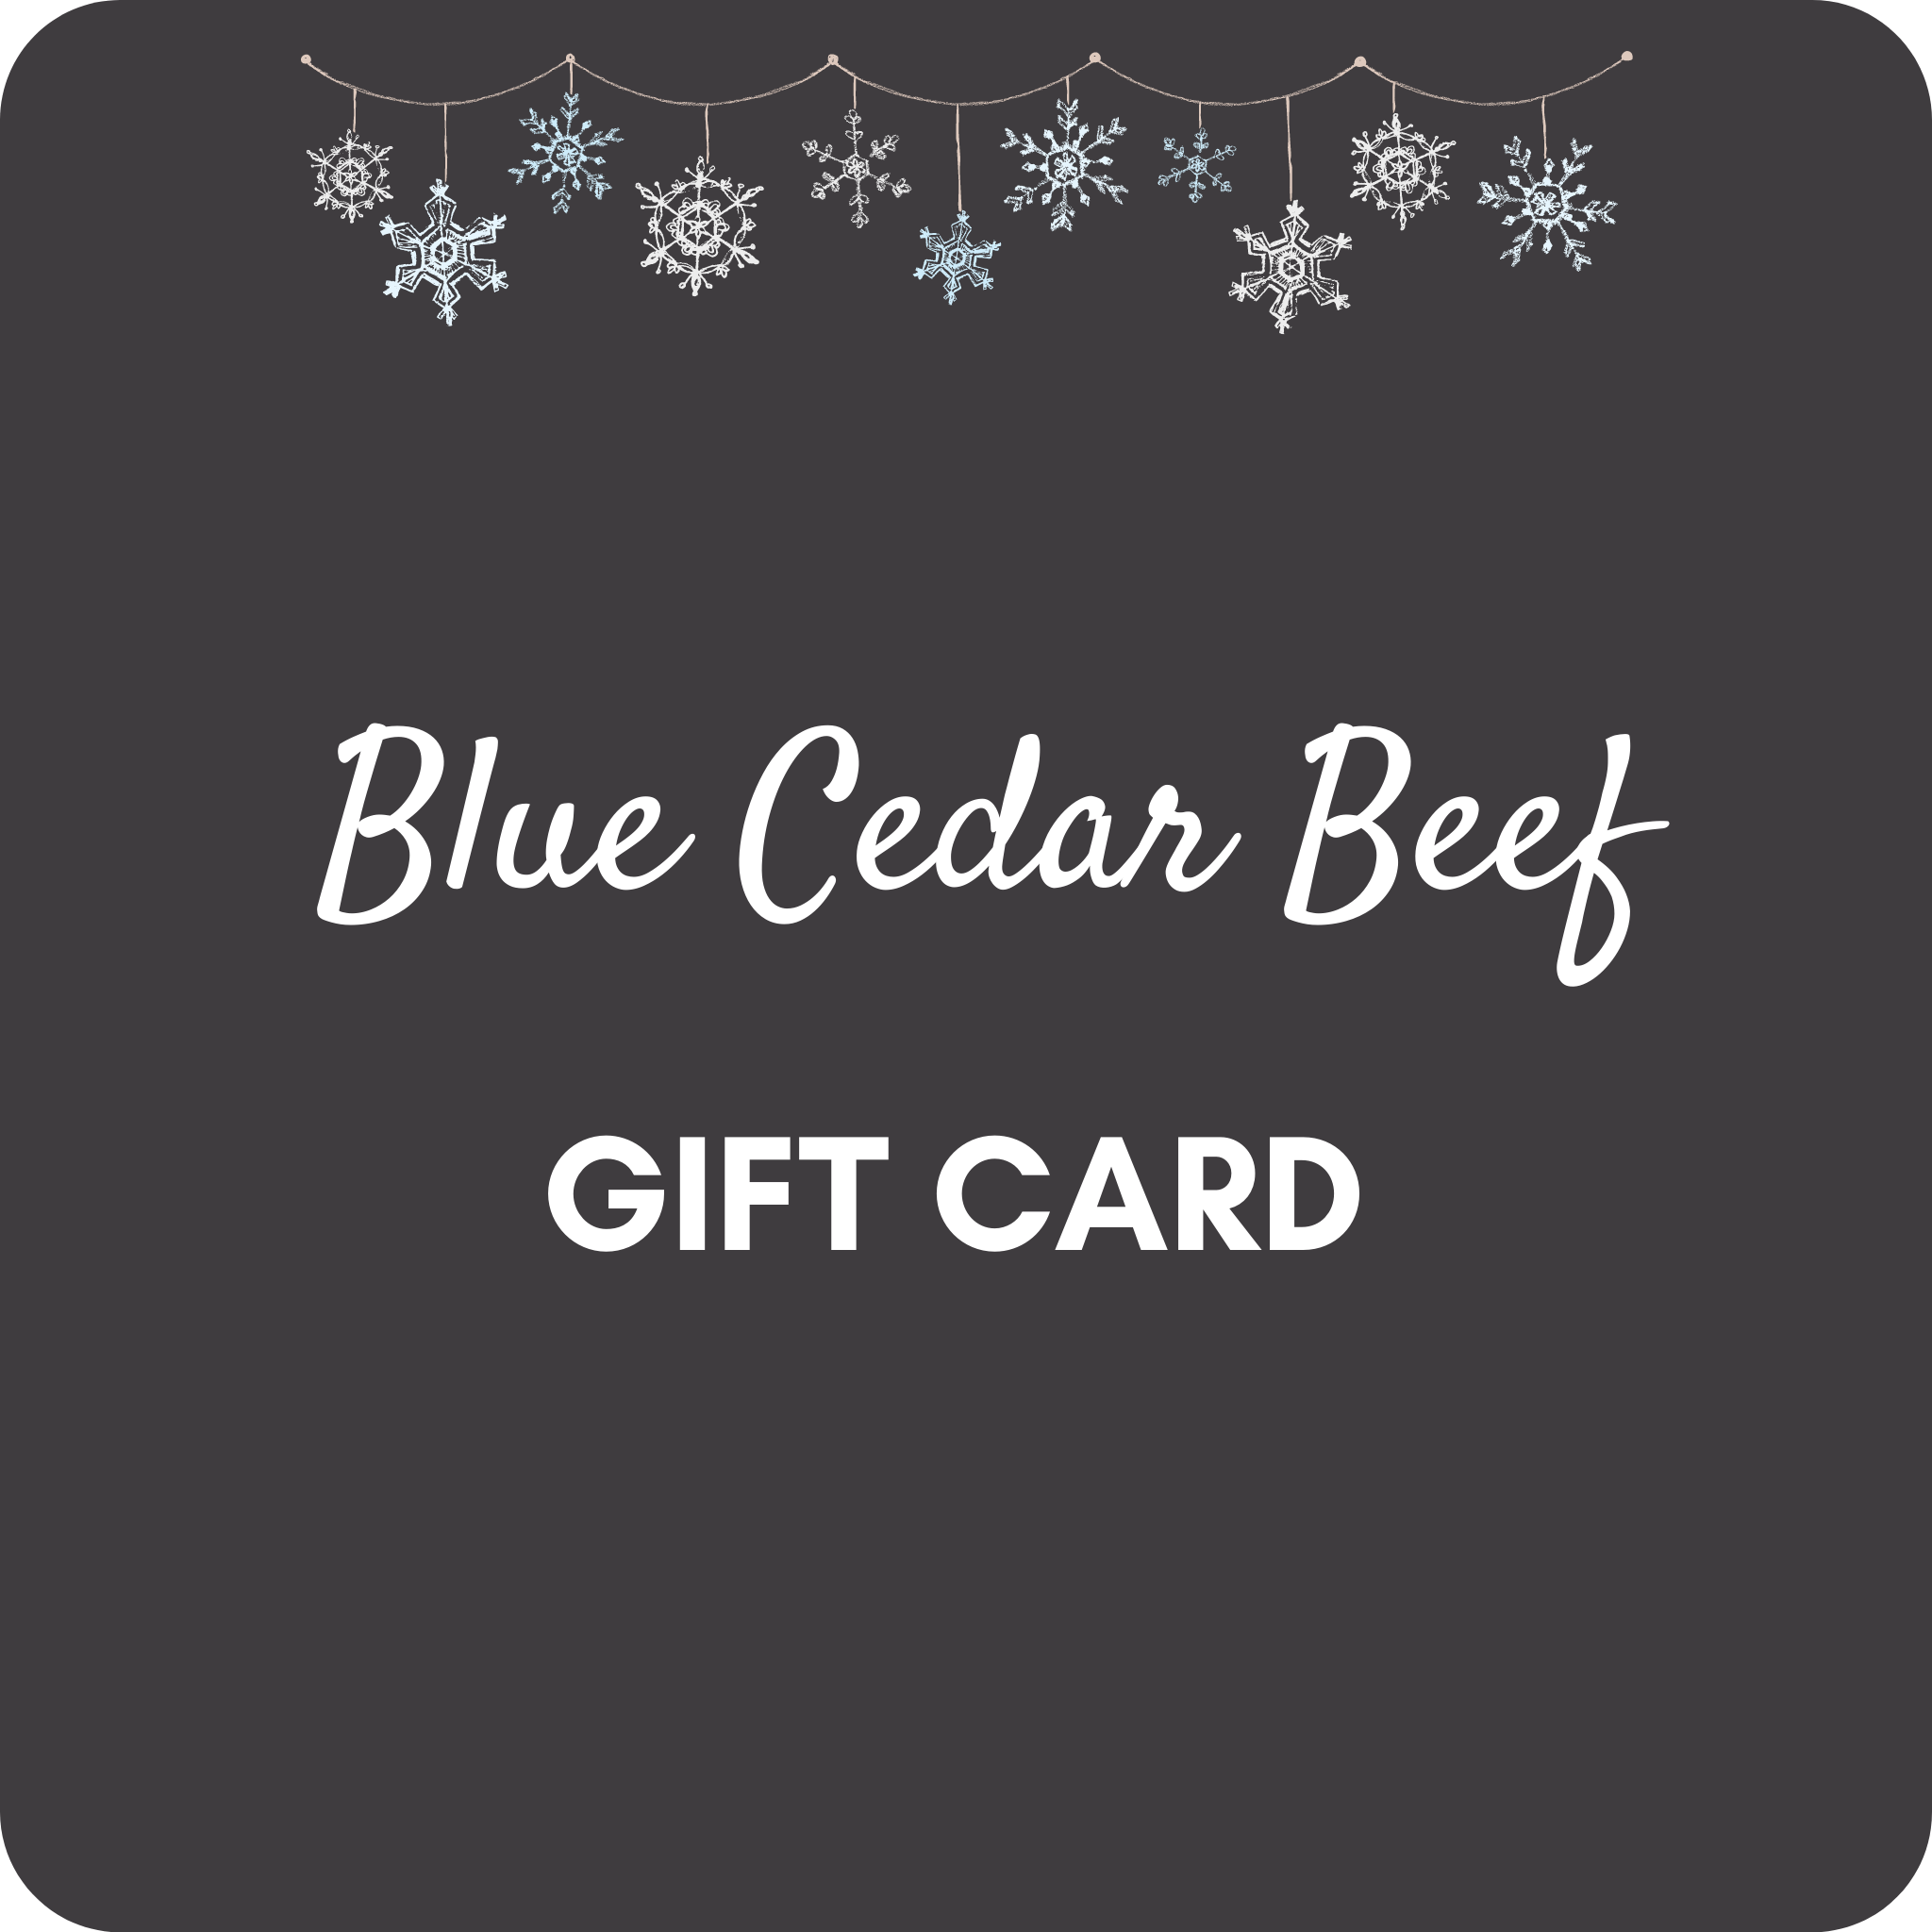 Blue Cedar Beef Gift Card